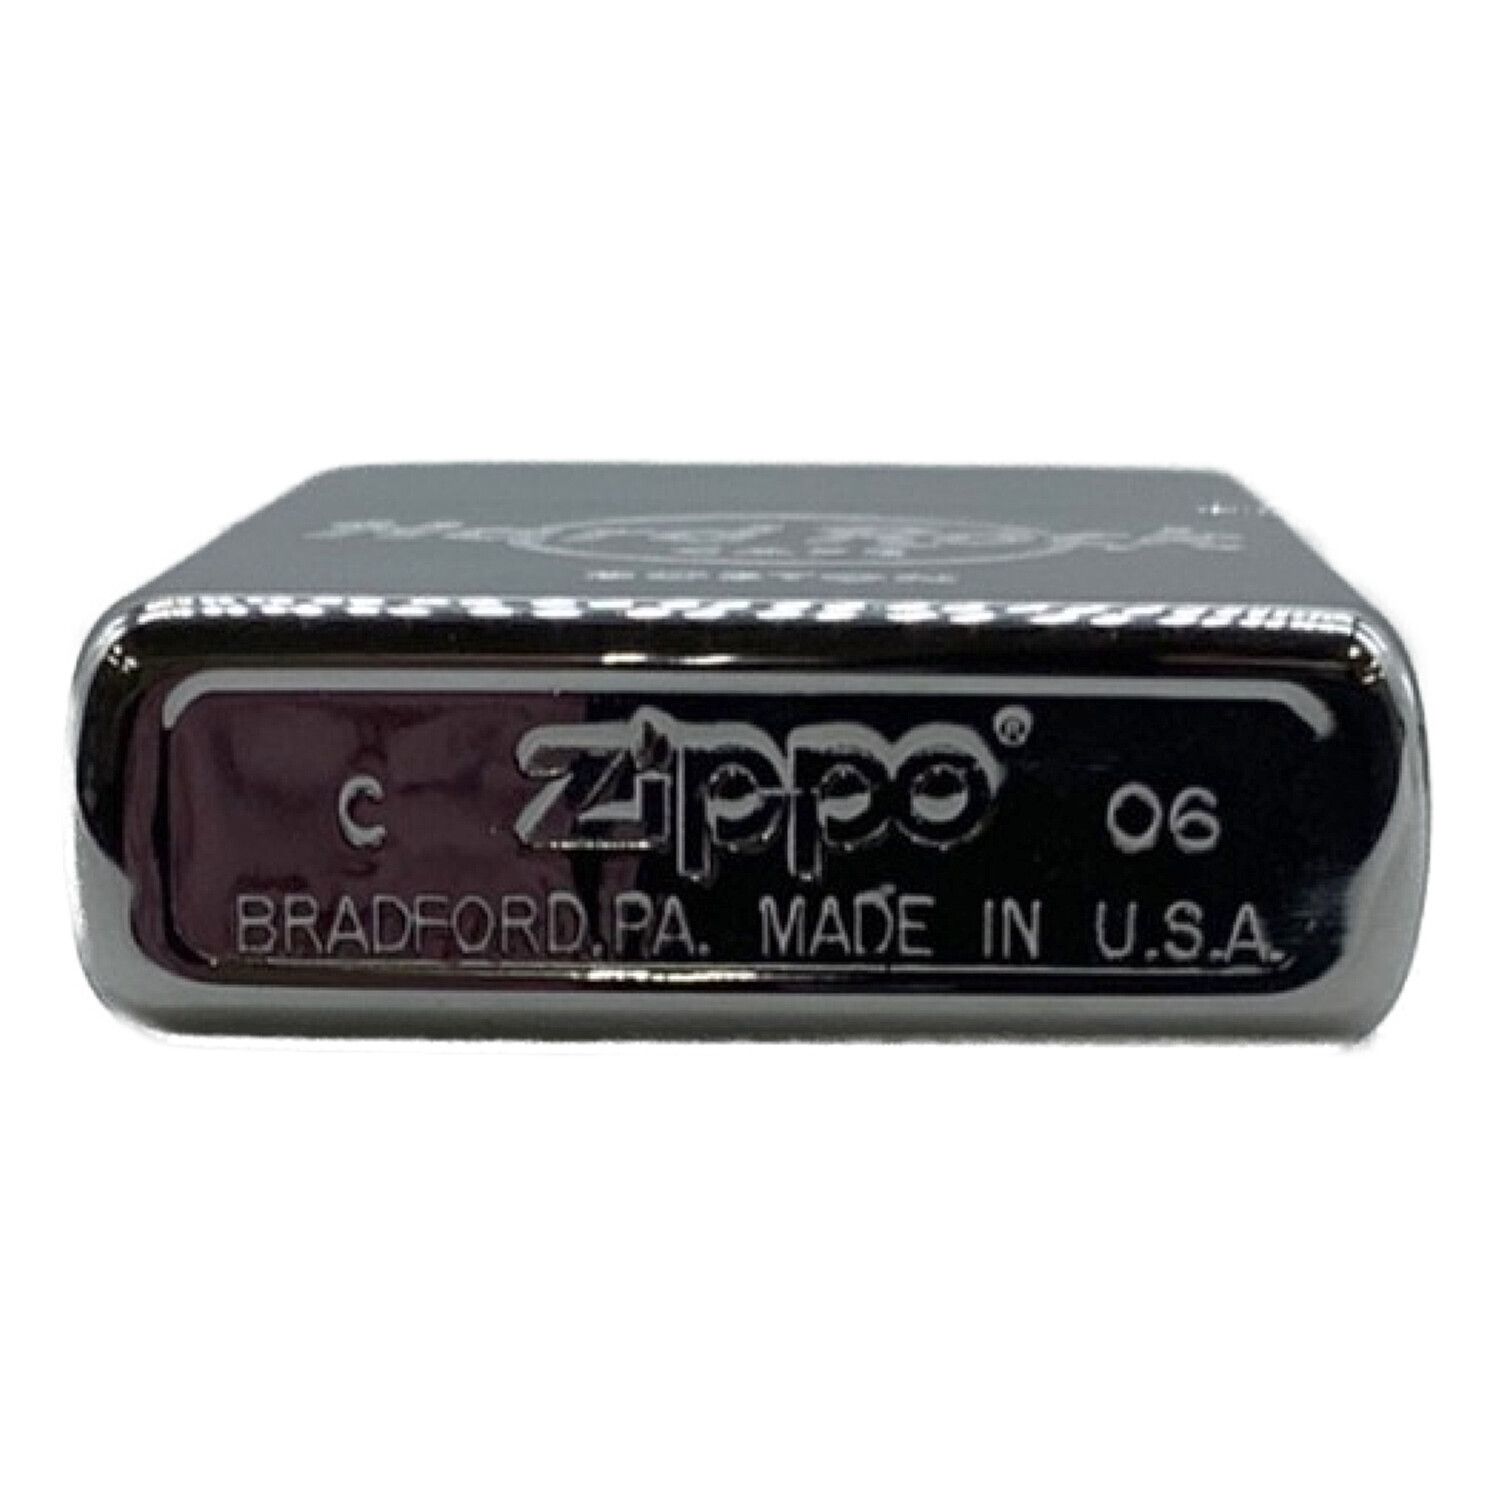 ZIPPO (ジッポ) オイルライター Hard Rock cafe BOSTON 2006年製 